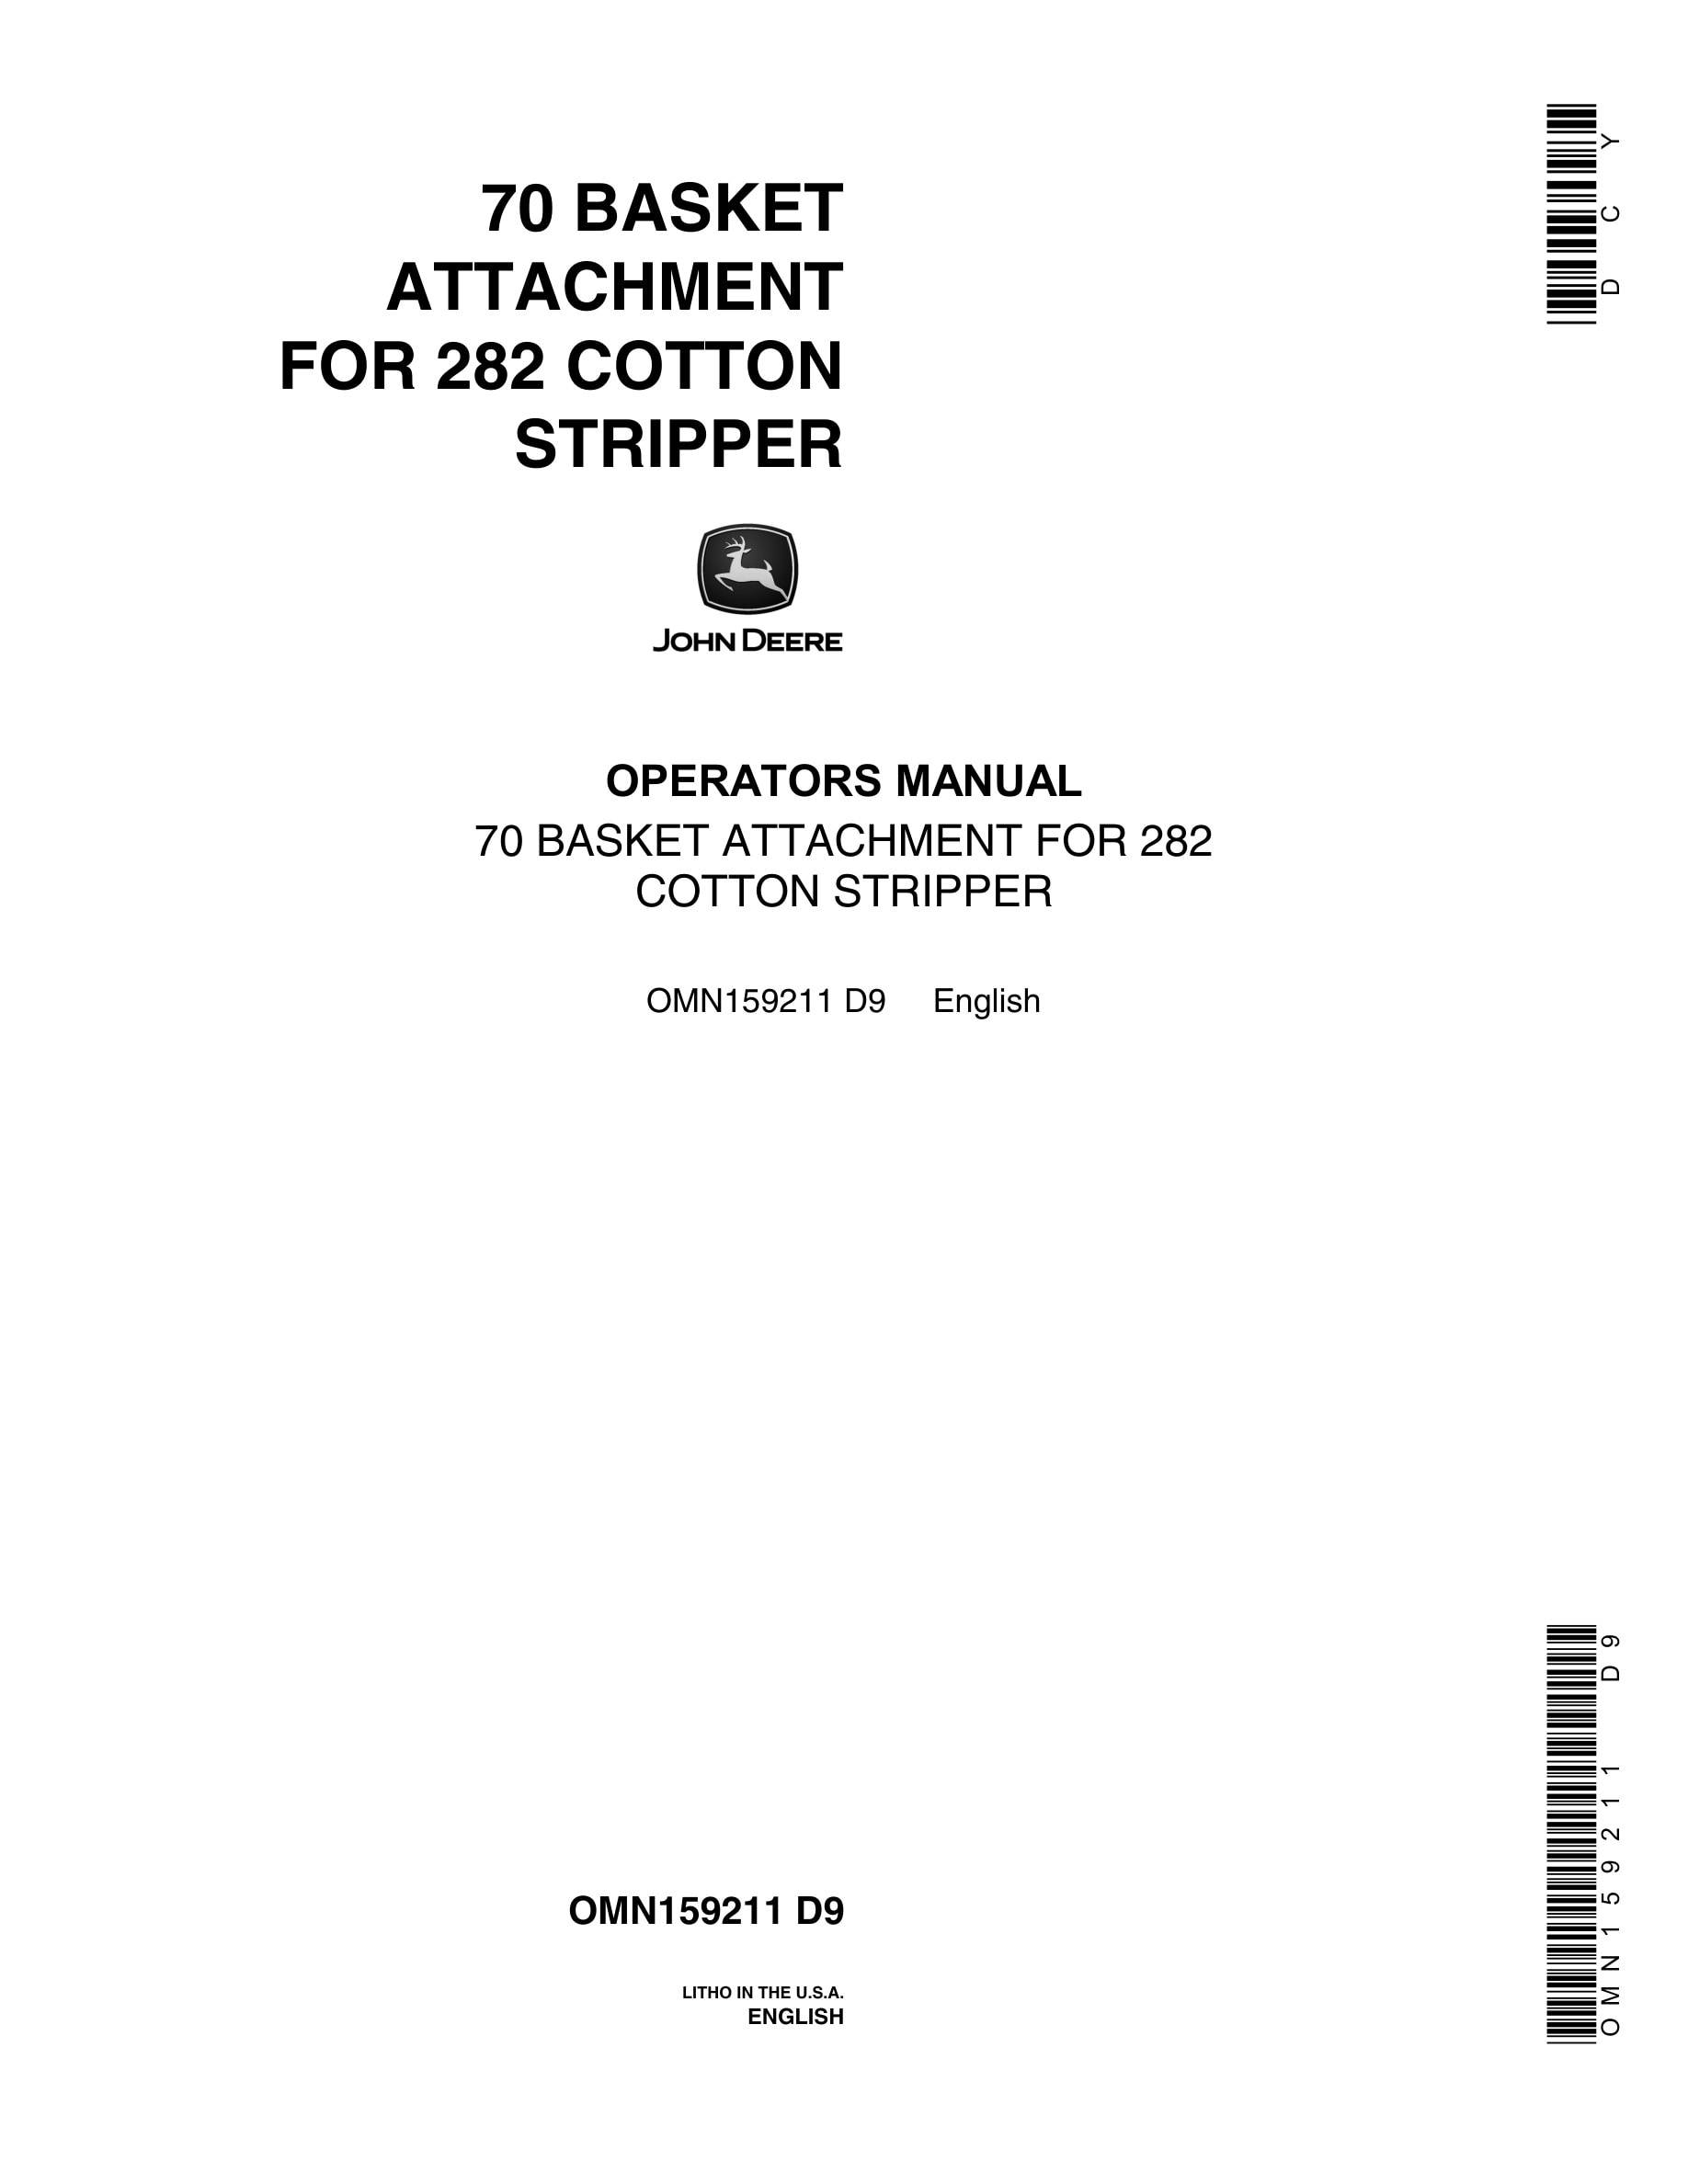 John Deere 70 Basket Attachment For 282 Cotton Sripper Operator Manual OMN159211-1